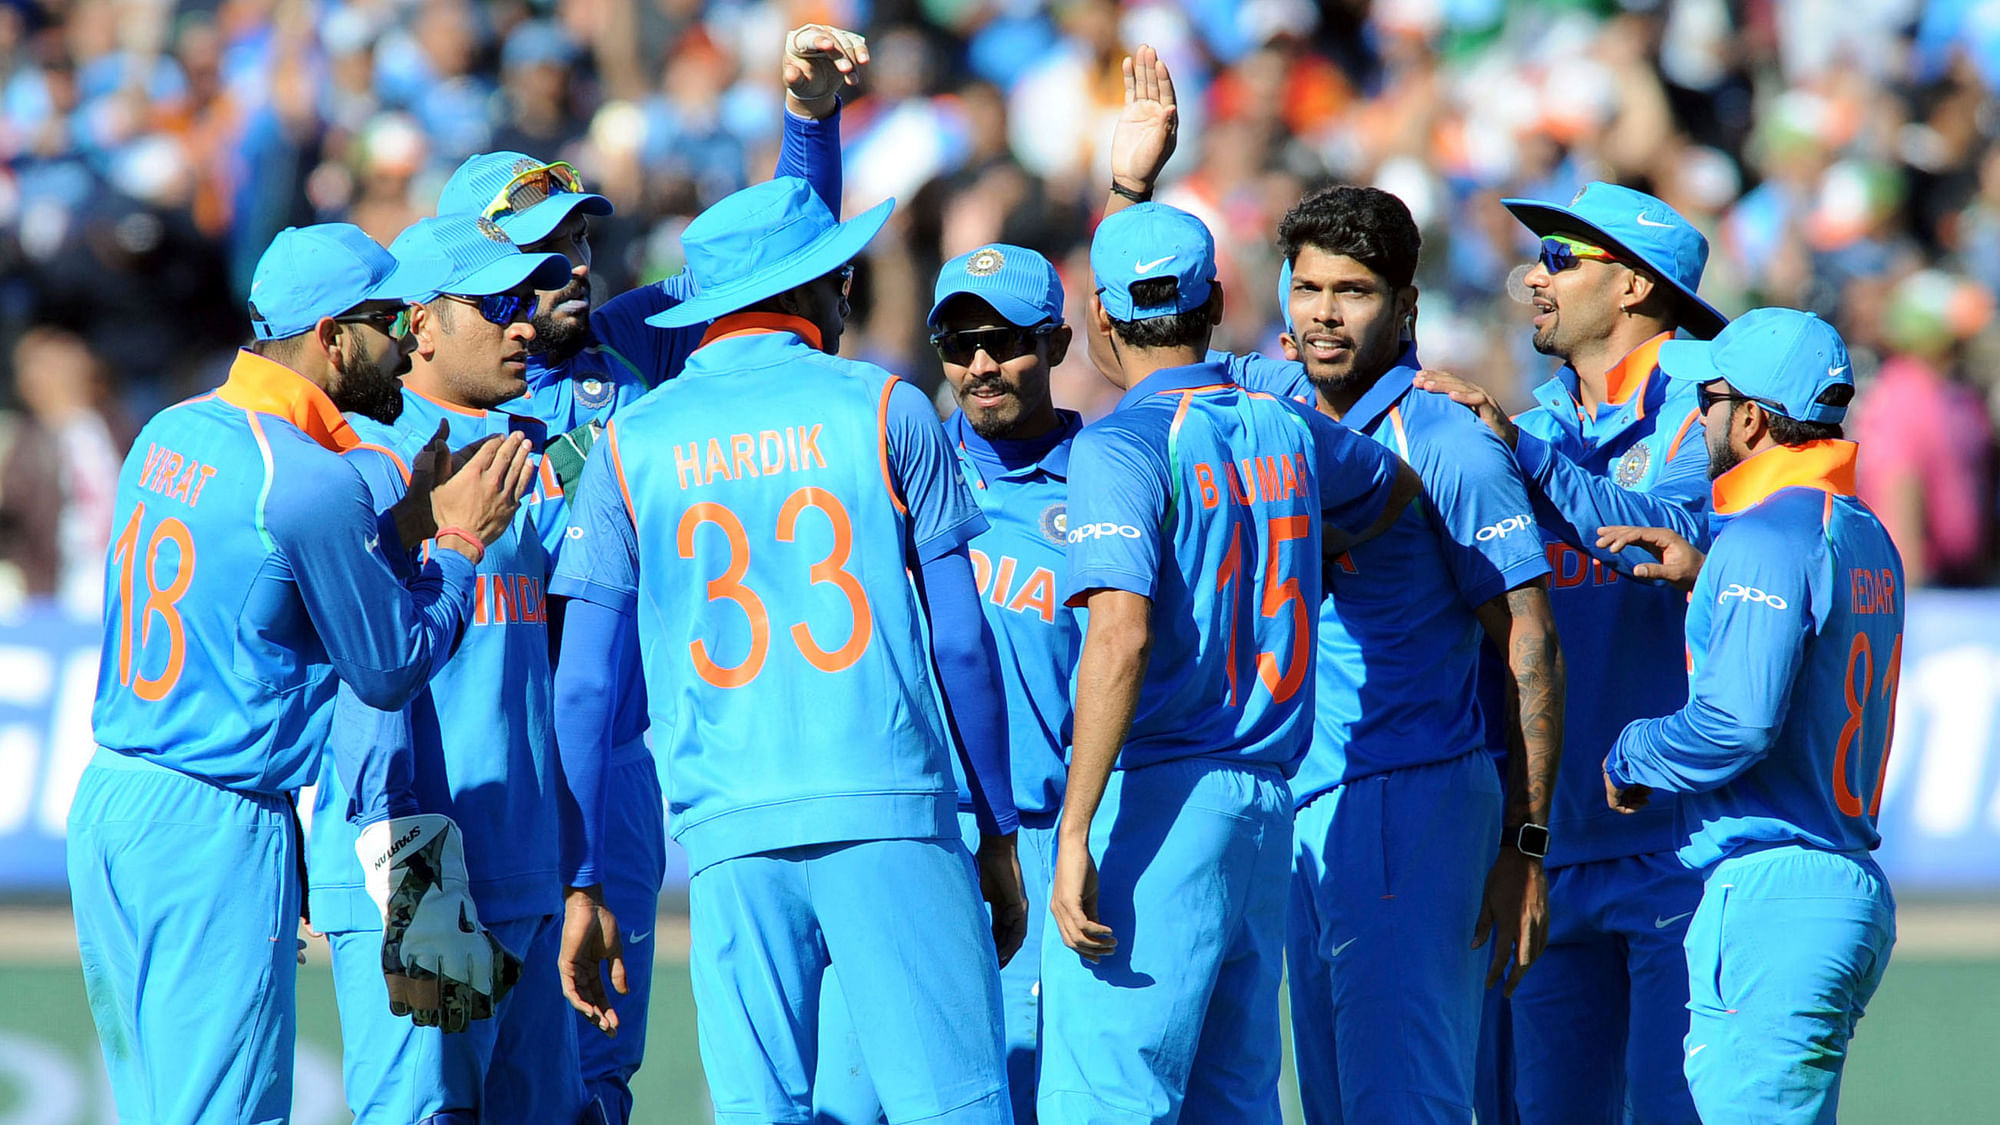 Umesh Yadav celebrates a wicket with his teammates. (Photo: AP)